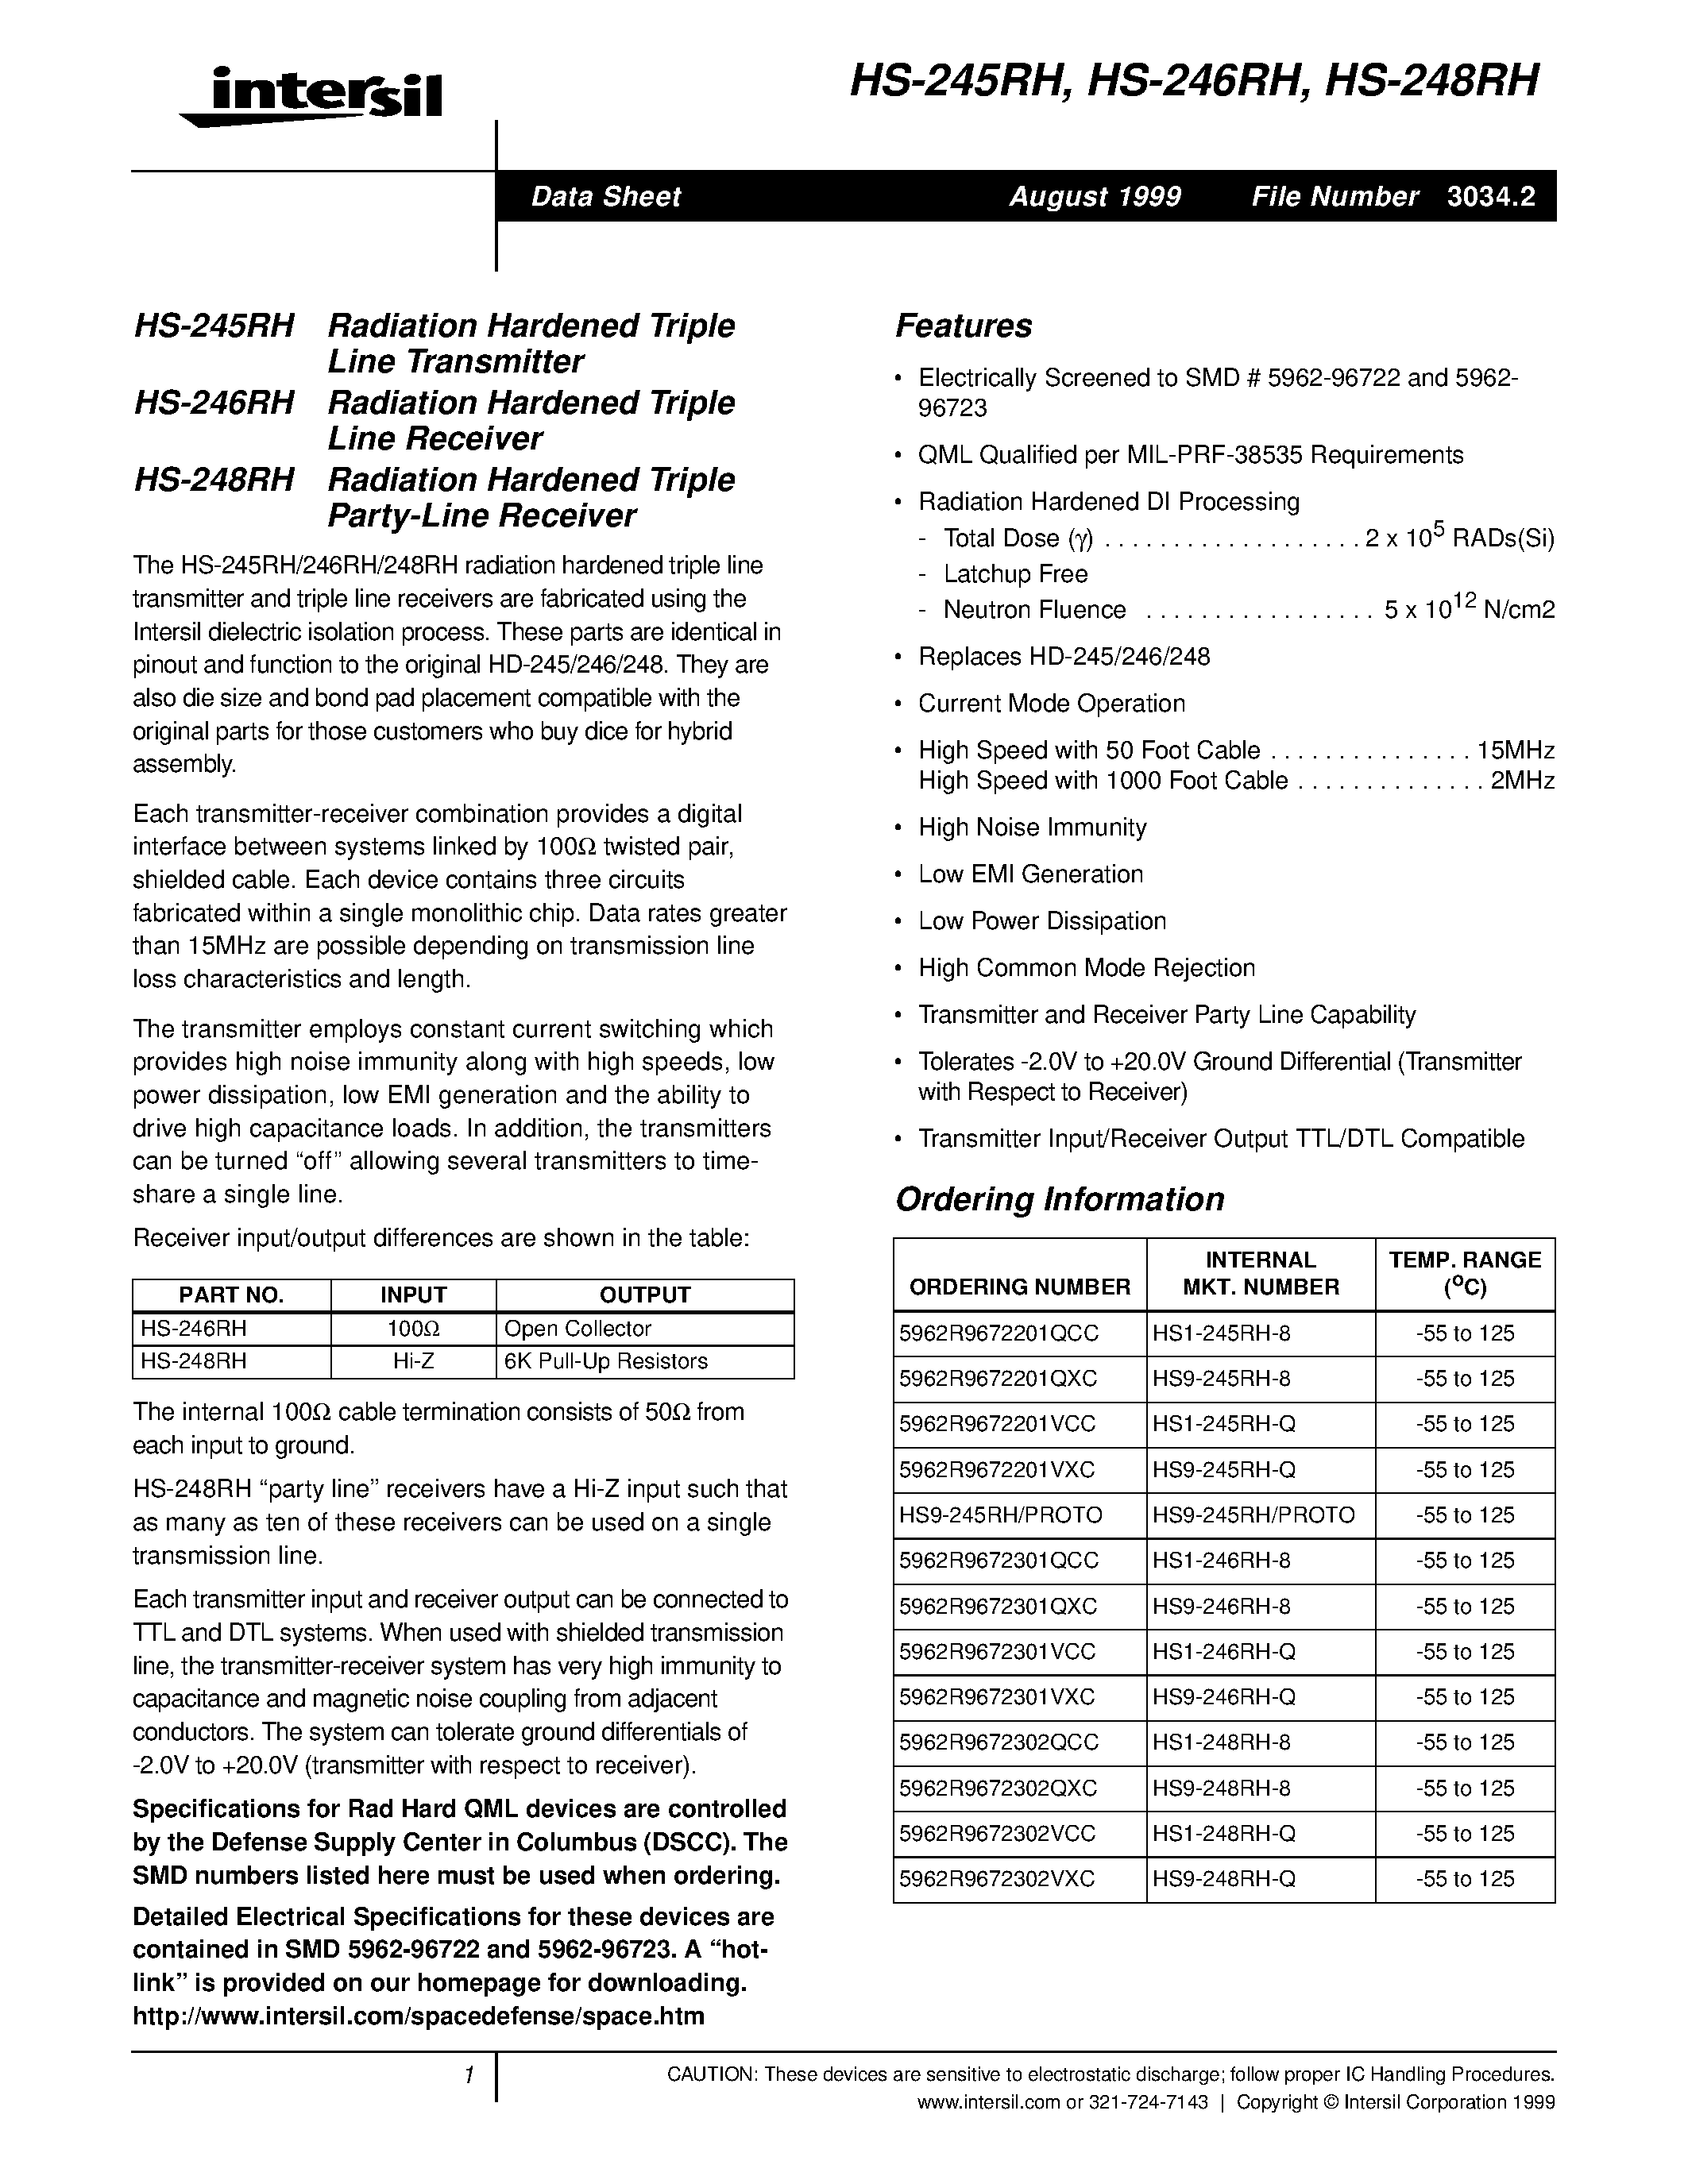 Datasheet HS9-245RH-8 - Radiation Hardened Triple Line(party-Line) Transmitter page 1